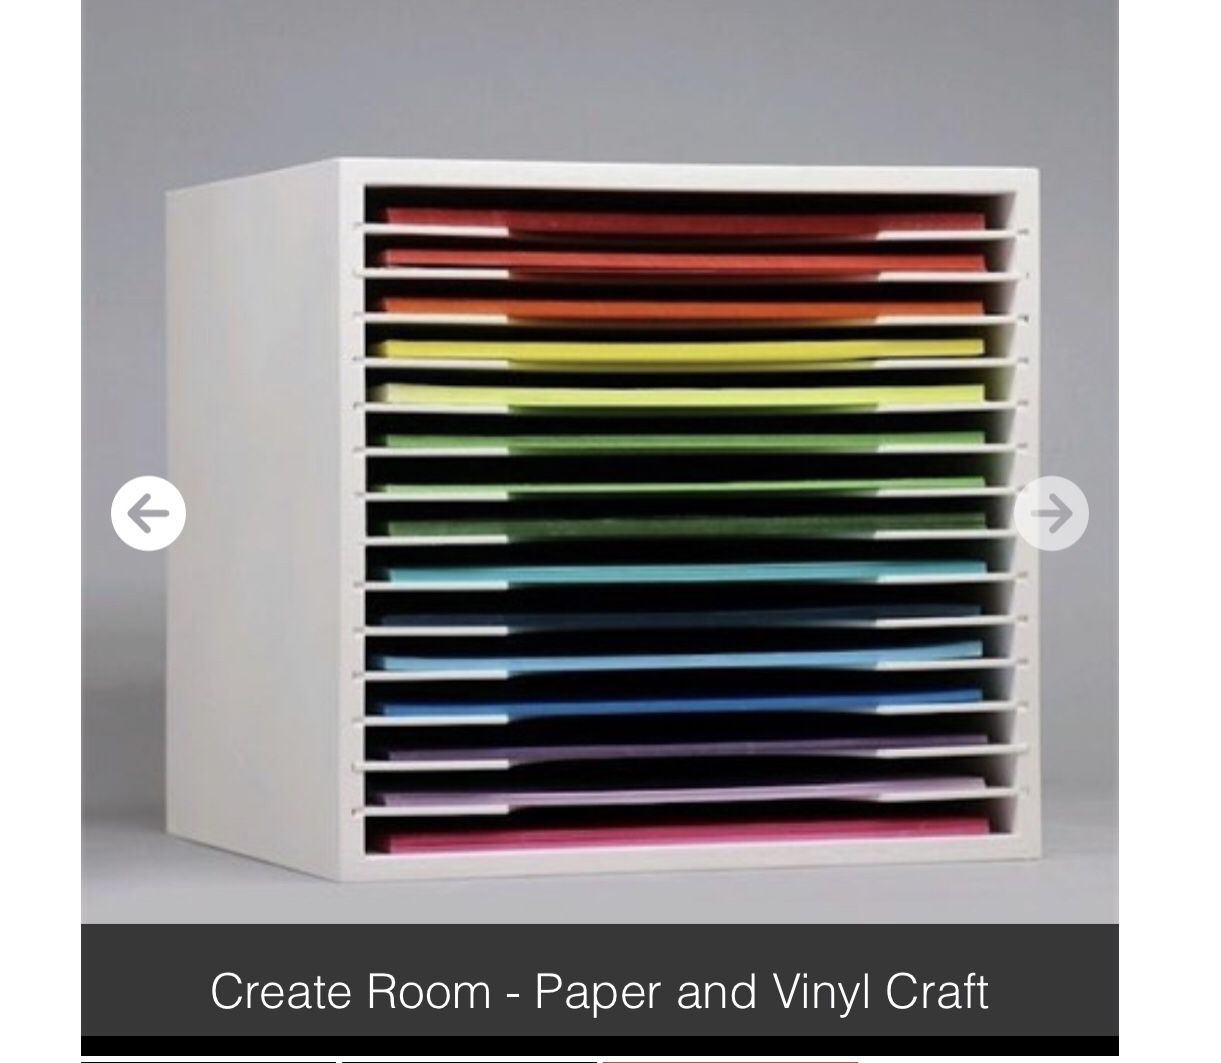  Create Room - Paper and Vinyl Craft Organizer 